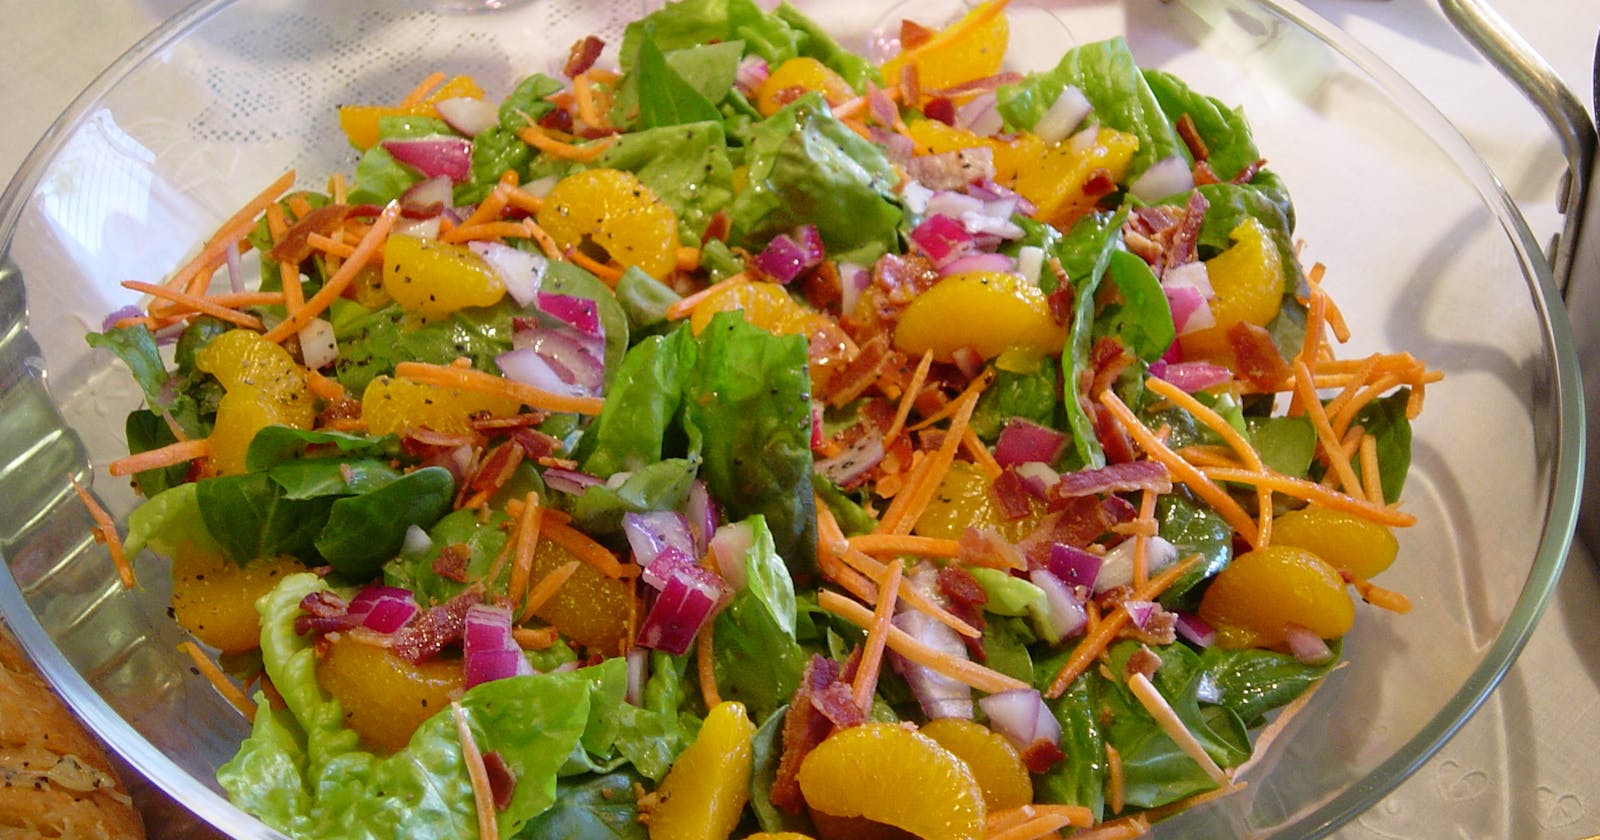 Mardi Gras Salad Recipe for Your Festive Mardi Gras Menu